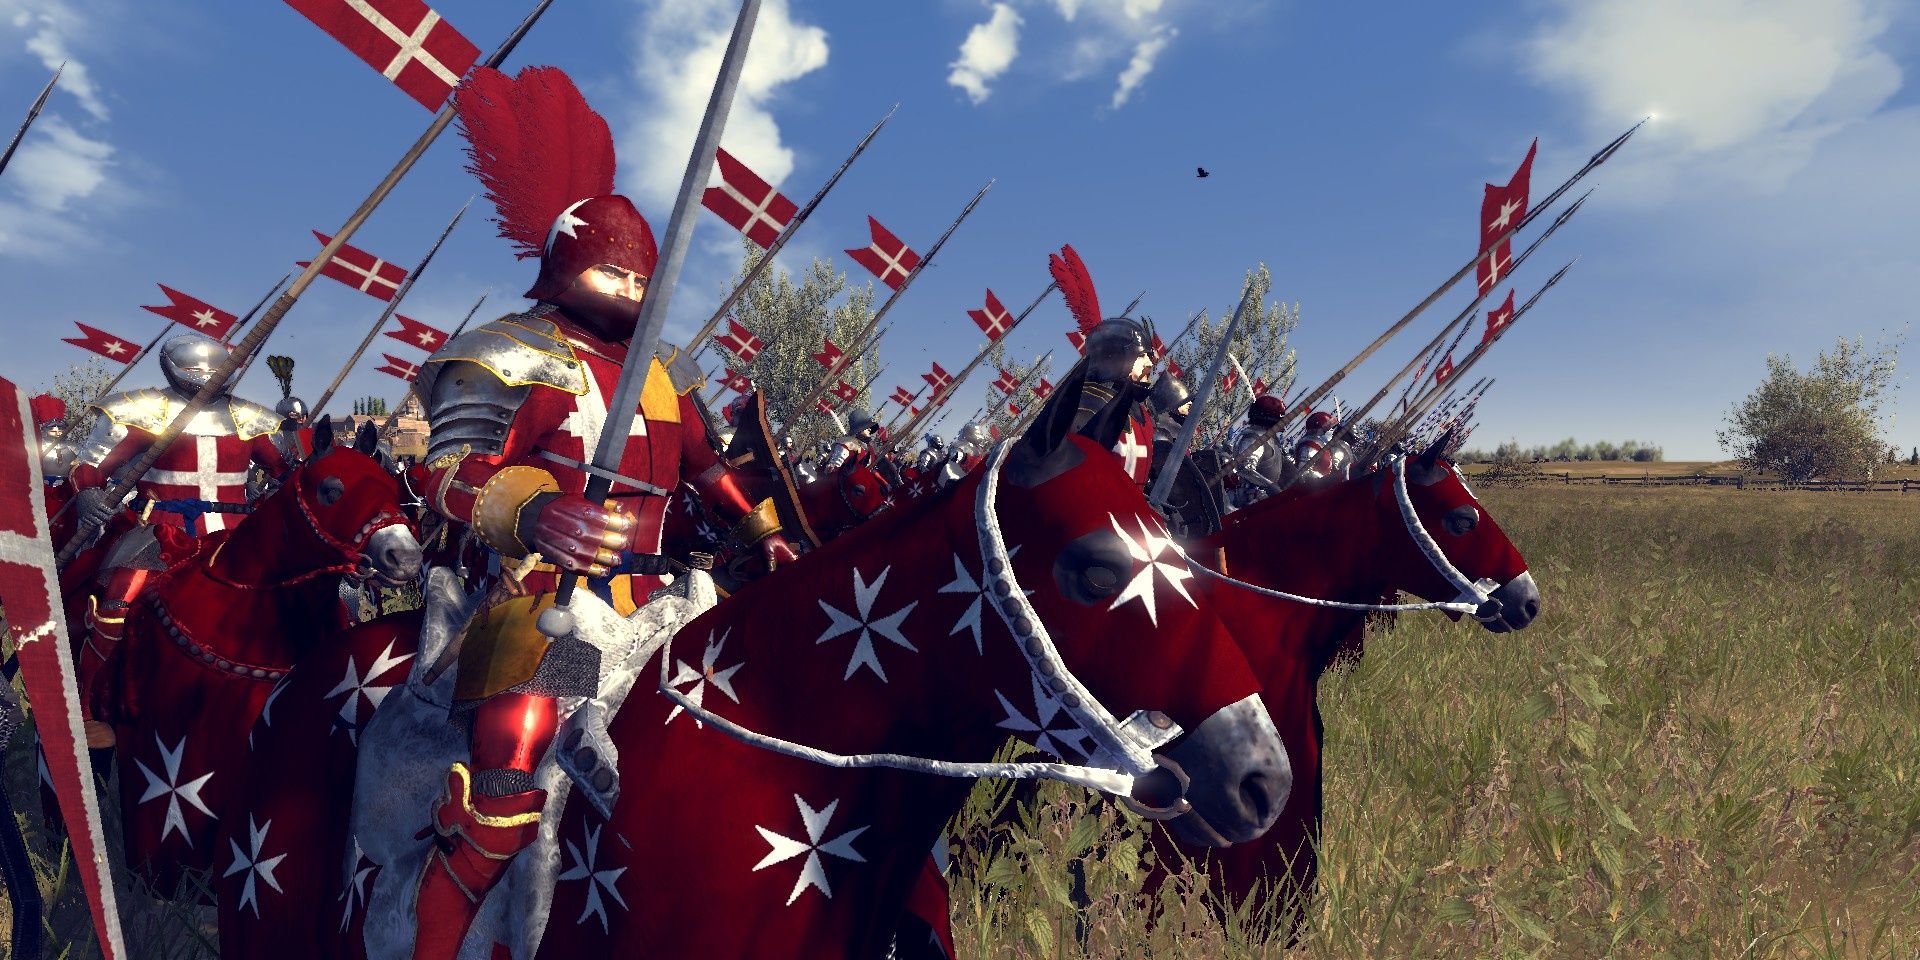 Medieval Kingdoms 1212 AD Mod For Total War Attila